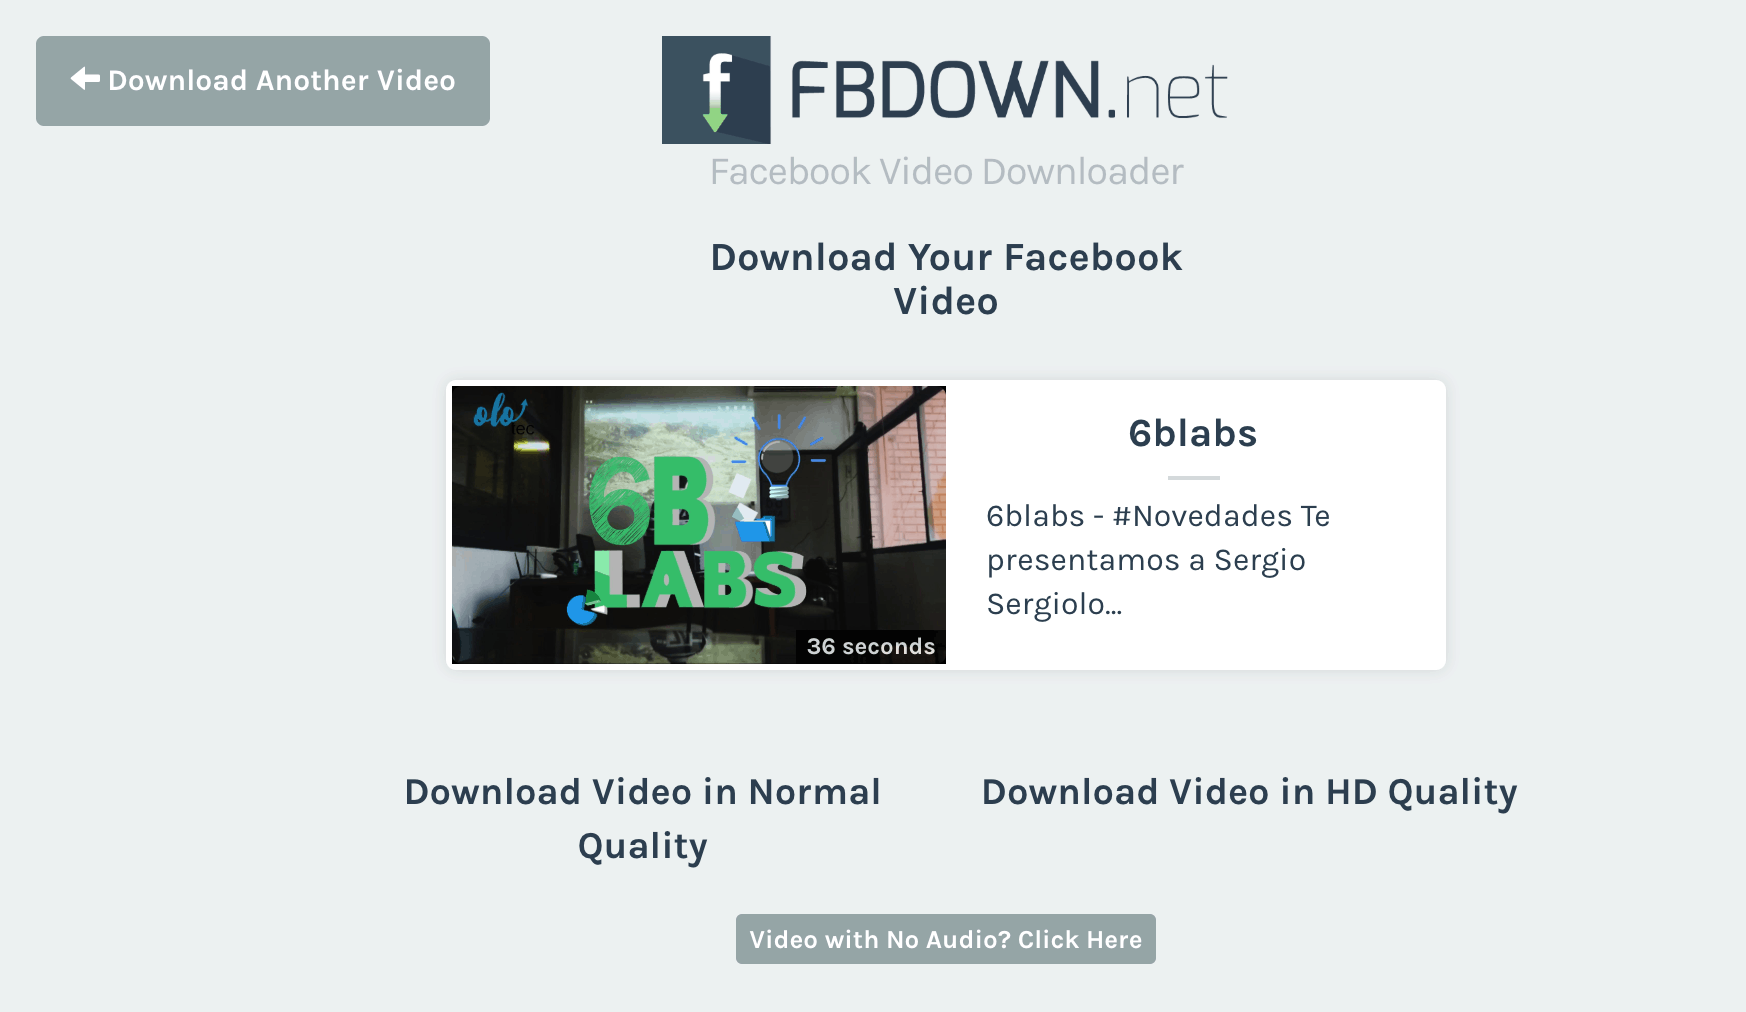 FBdown netto video downloader